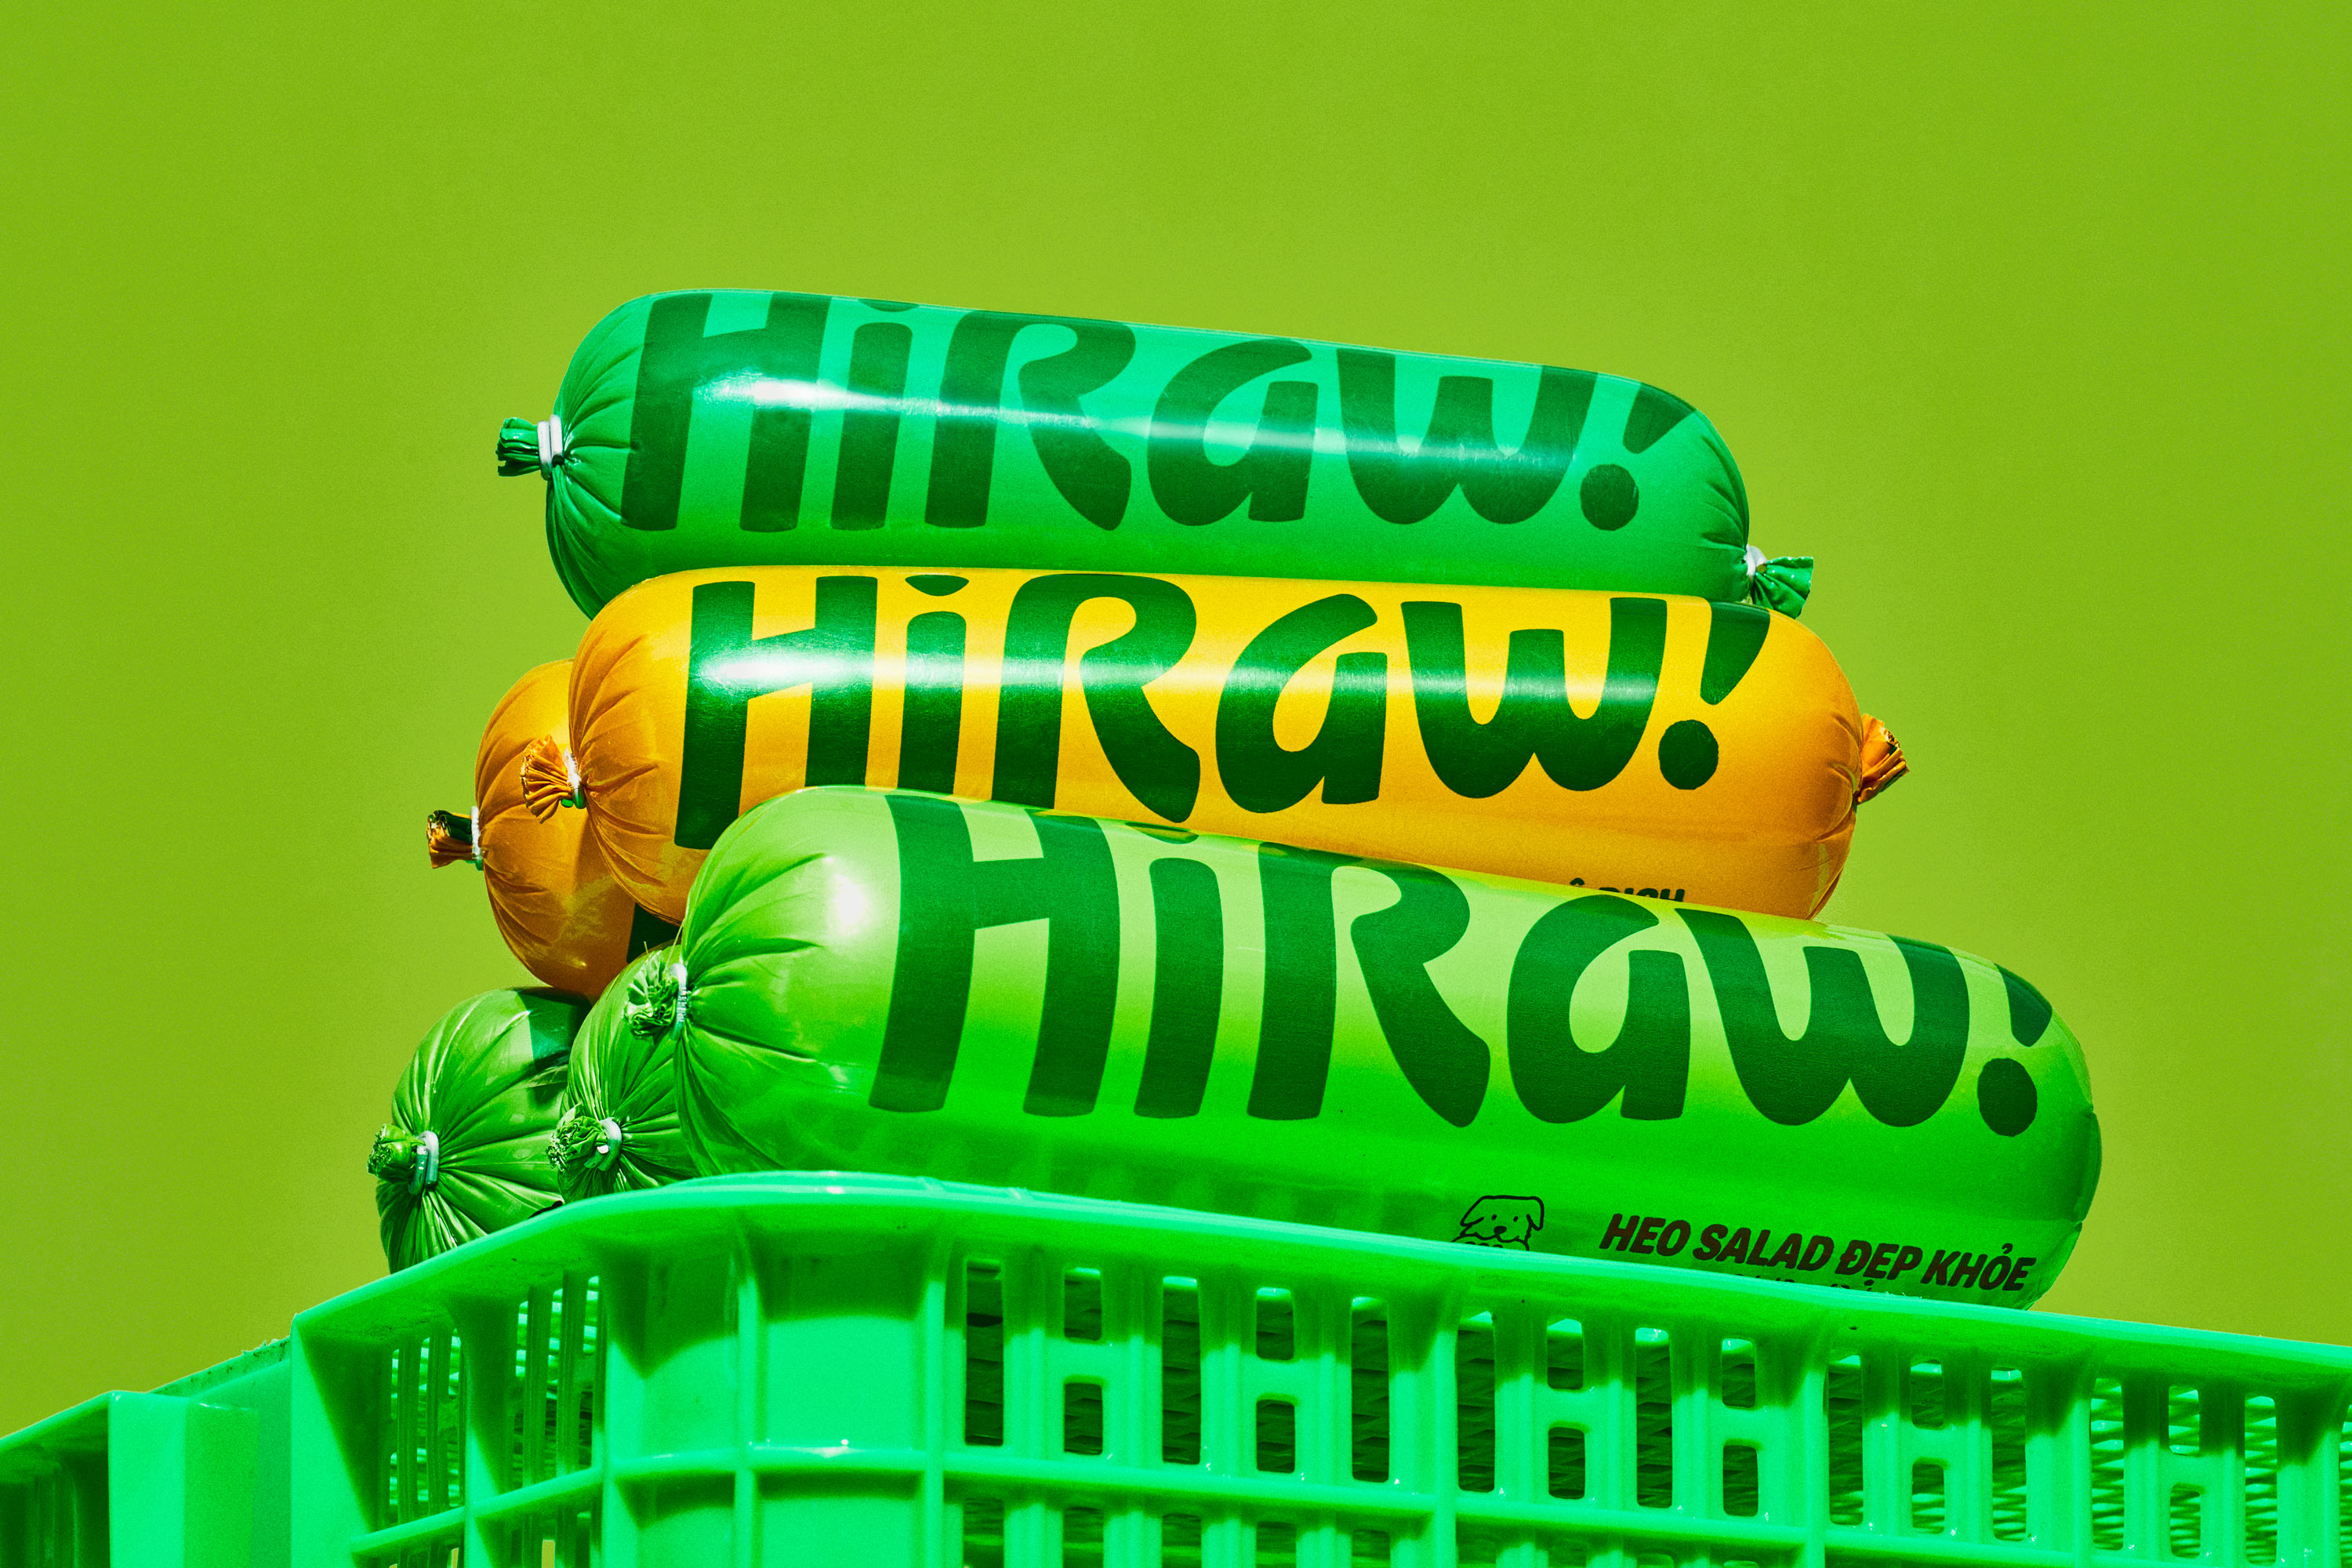 HiRaw! Rebrand by M — N Associates